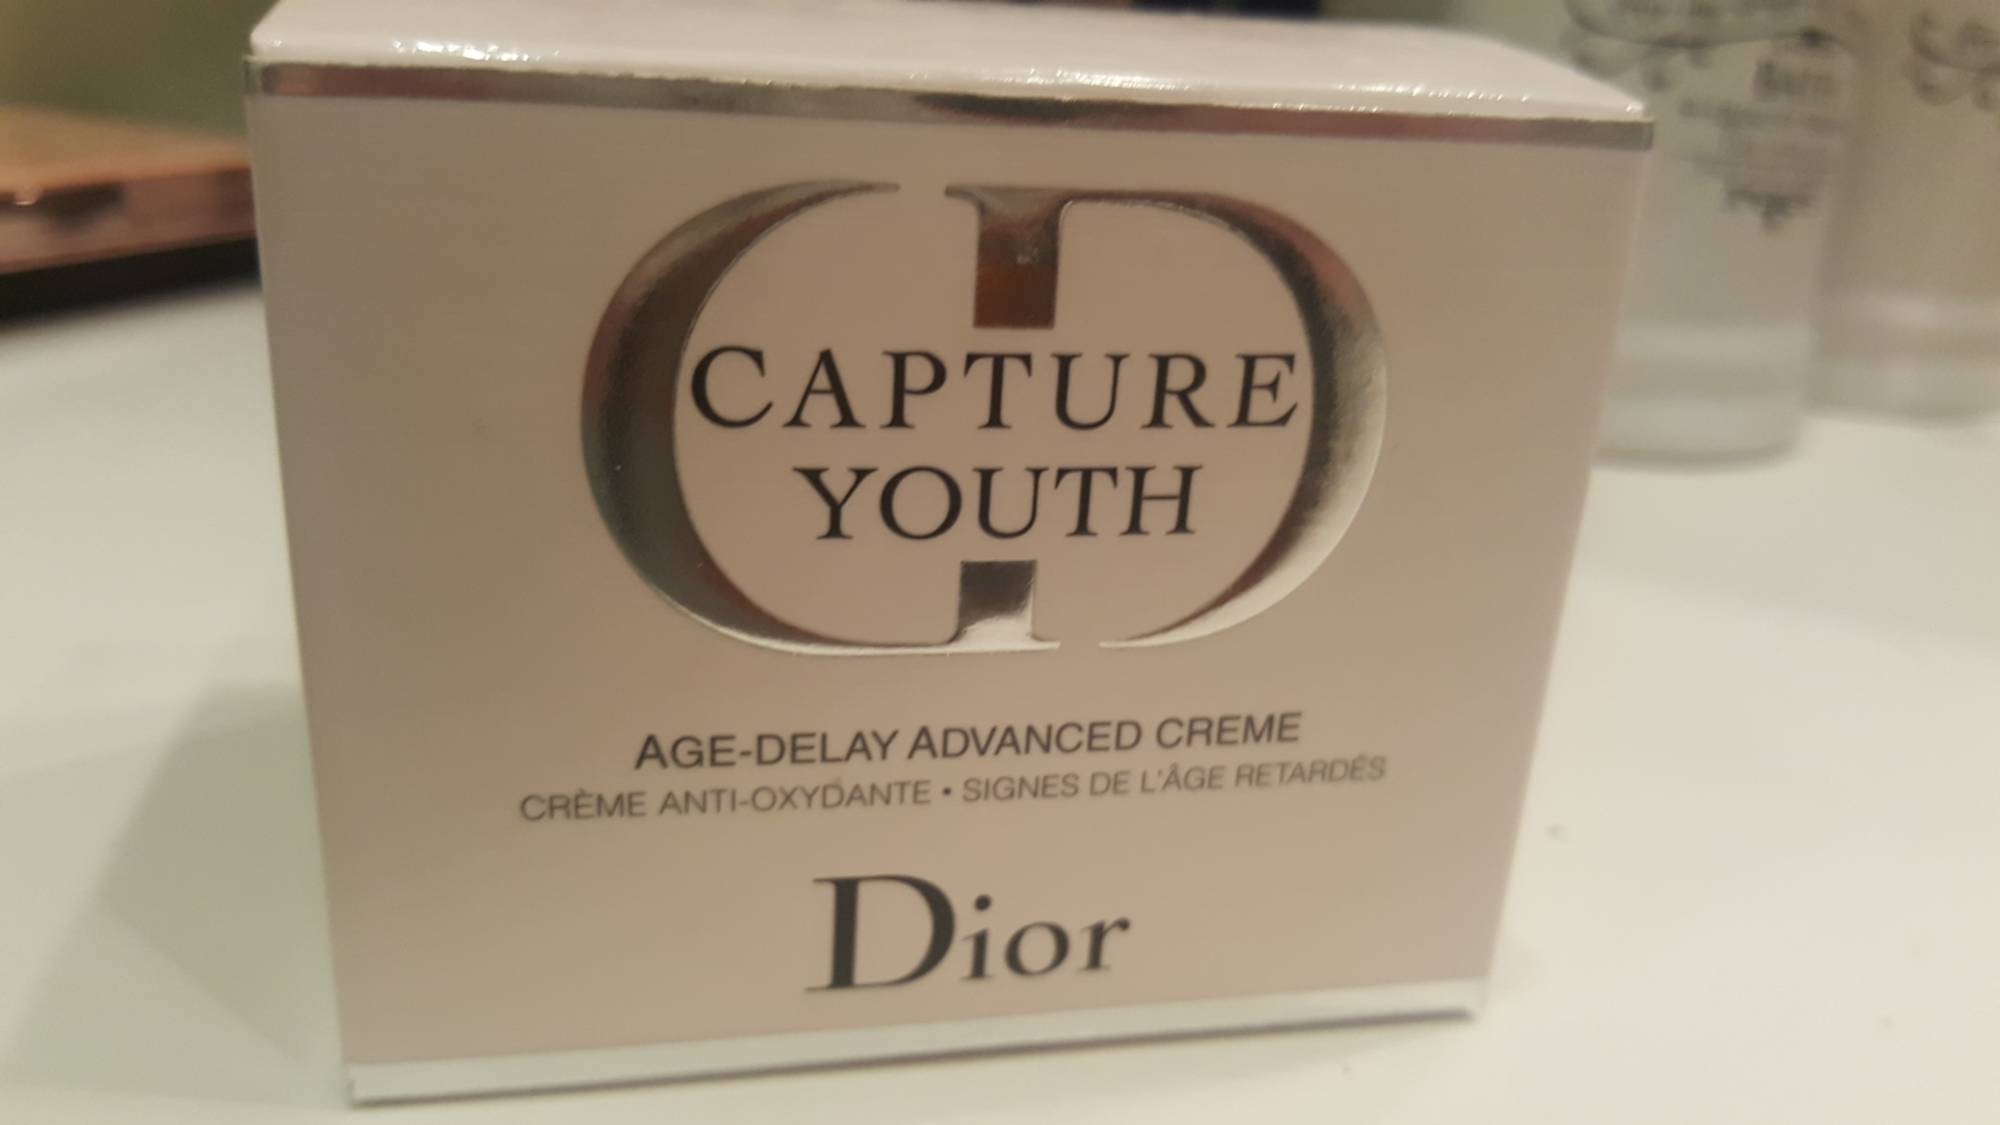 DIOR - Capture youth - Crème anti-oxydante